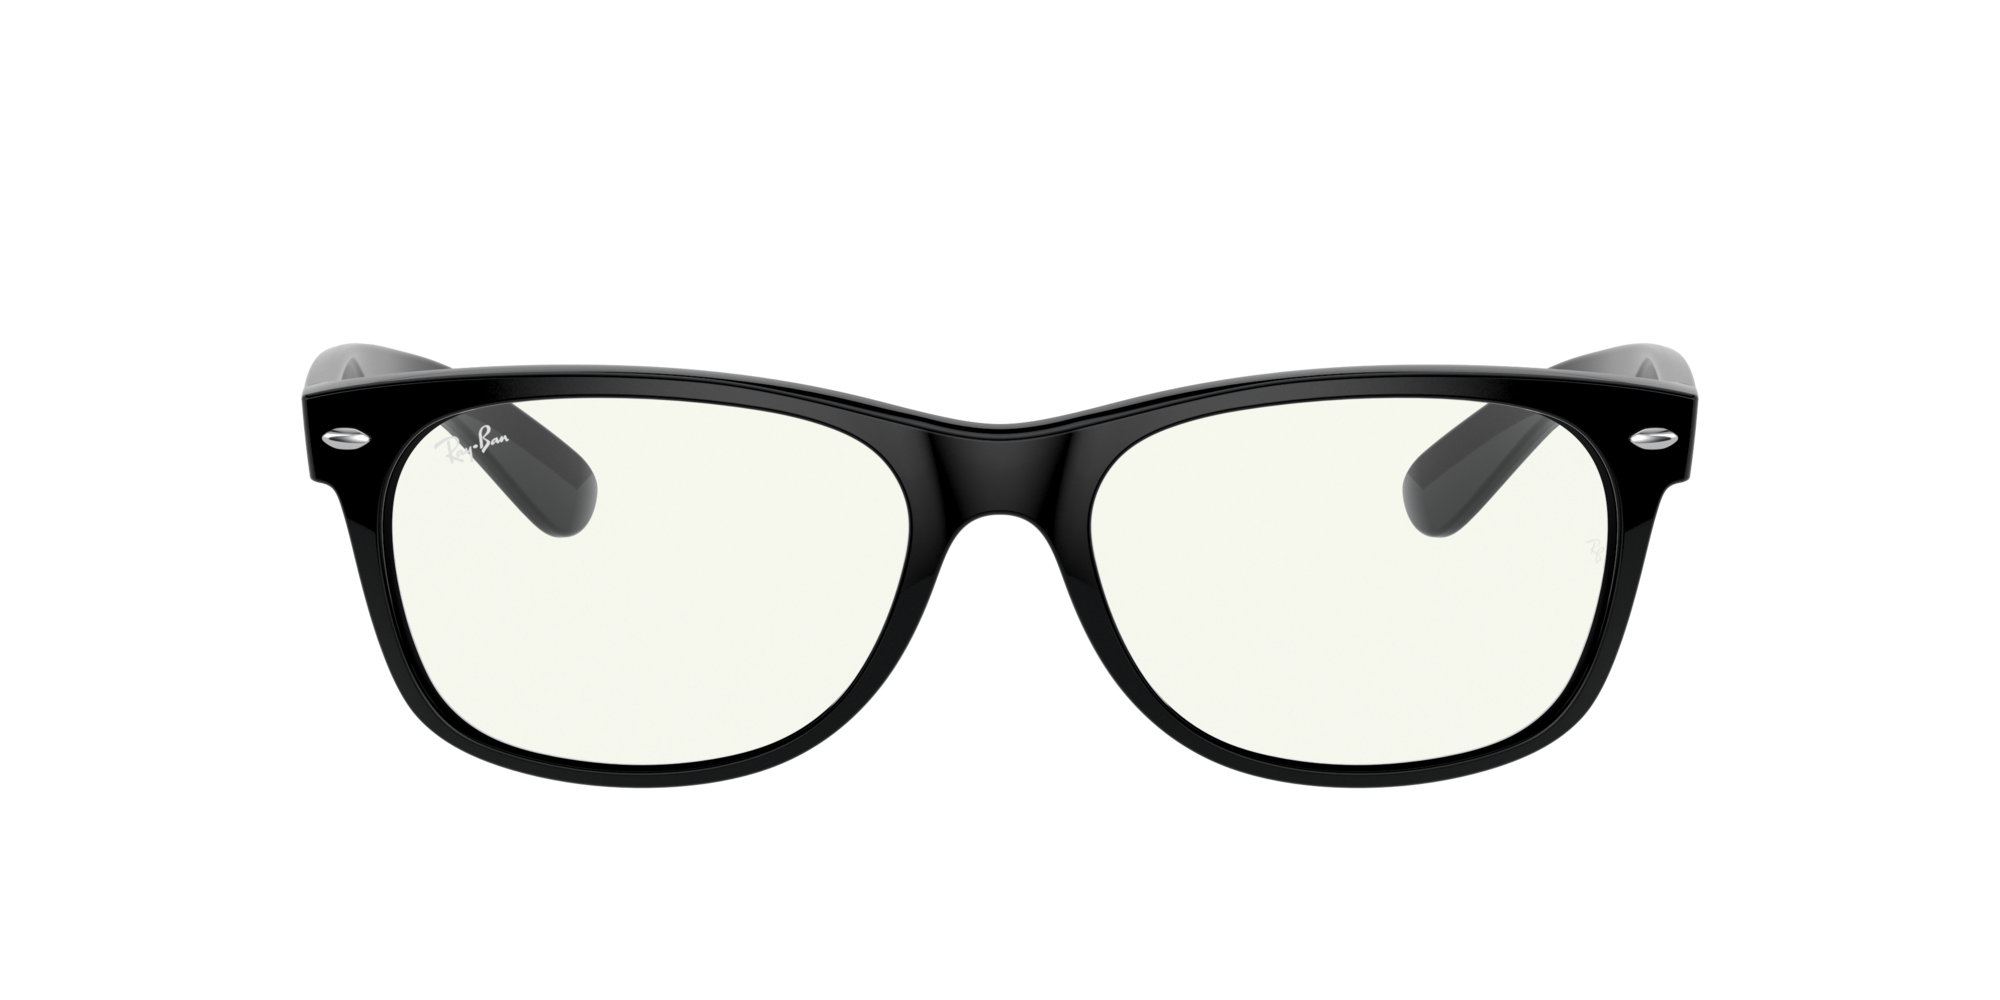 lenscrafters cartier glasses